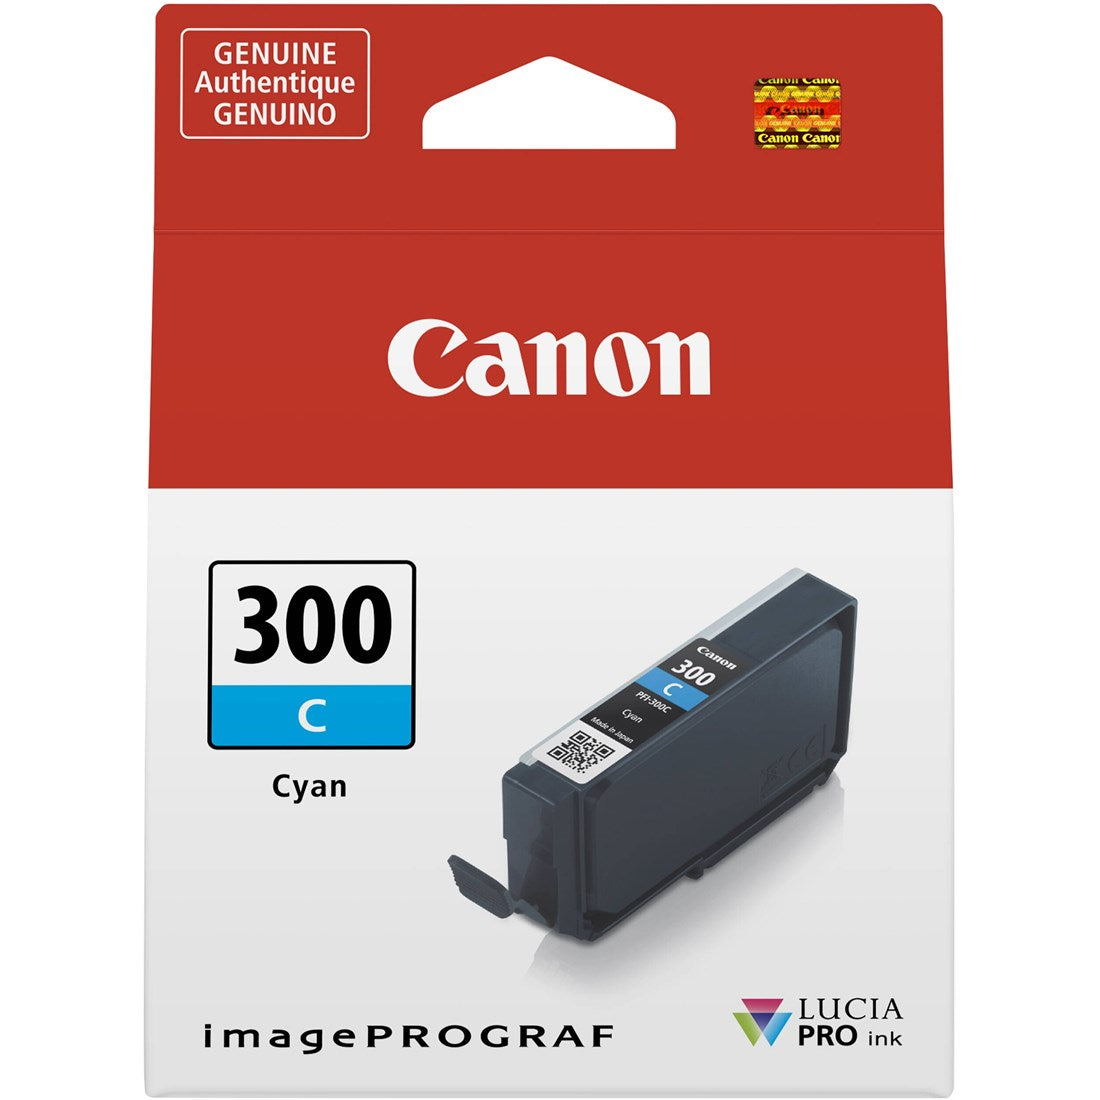 Product Image of Original Canon Printer Ink - Cyan Colour PFI-300